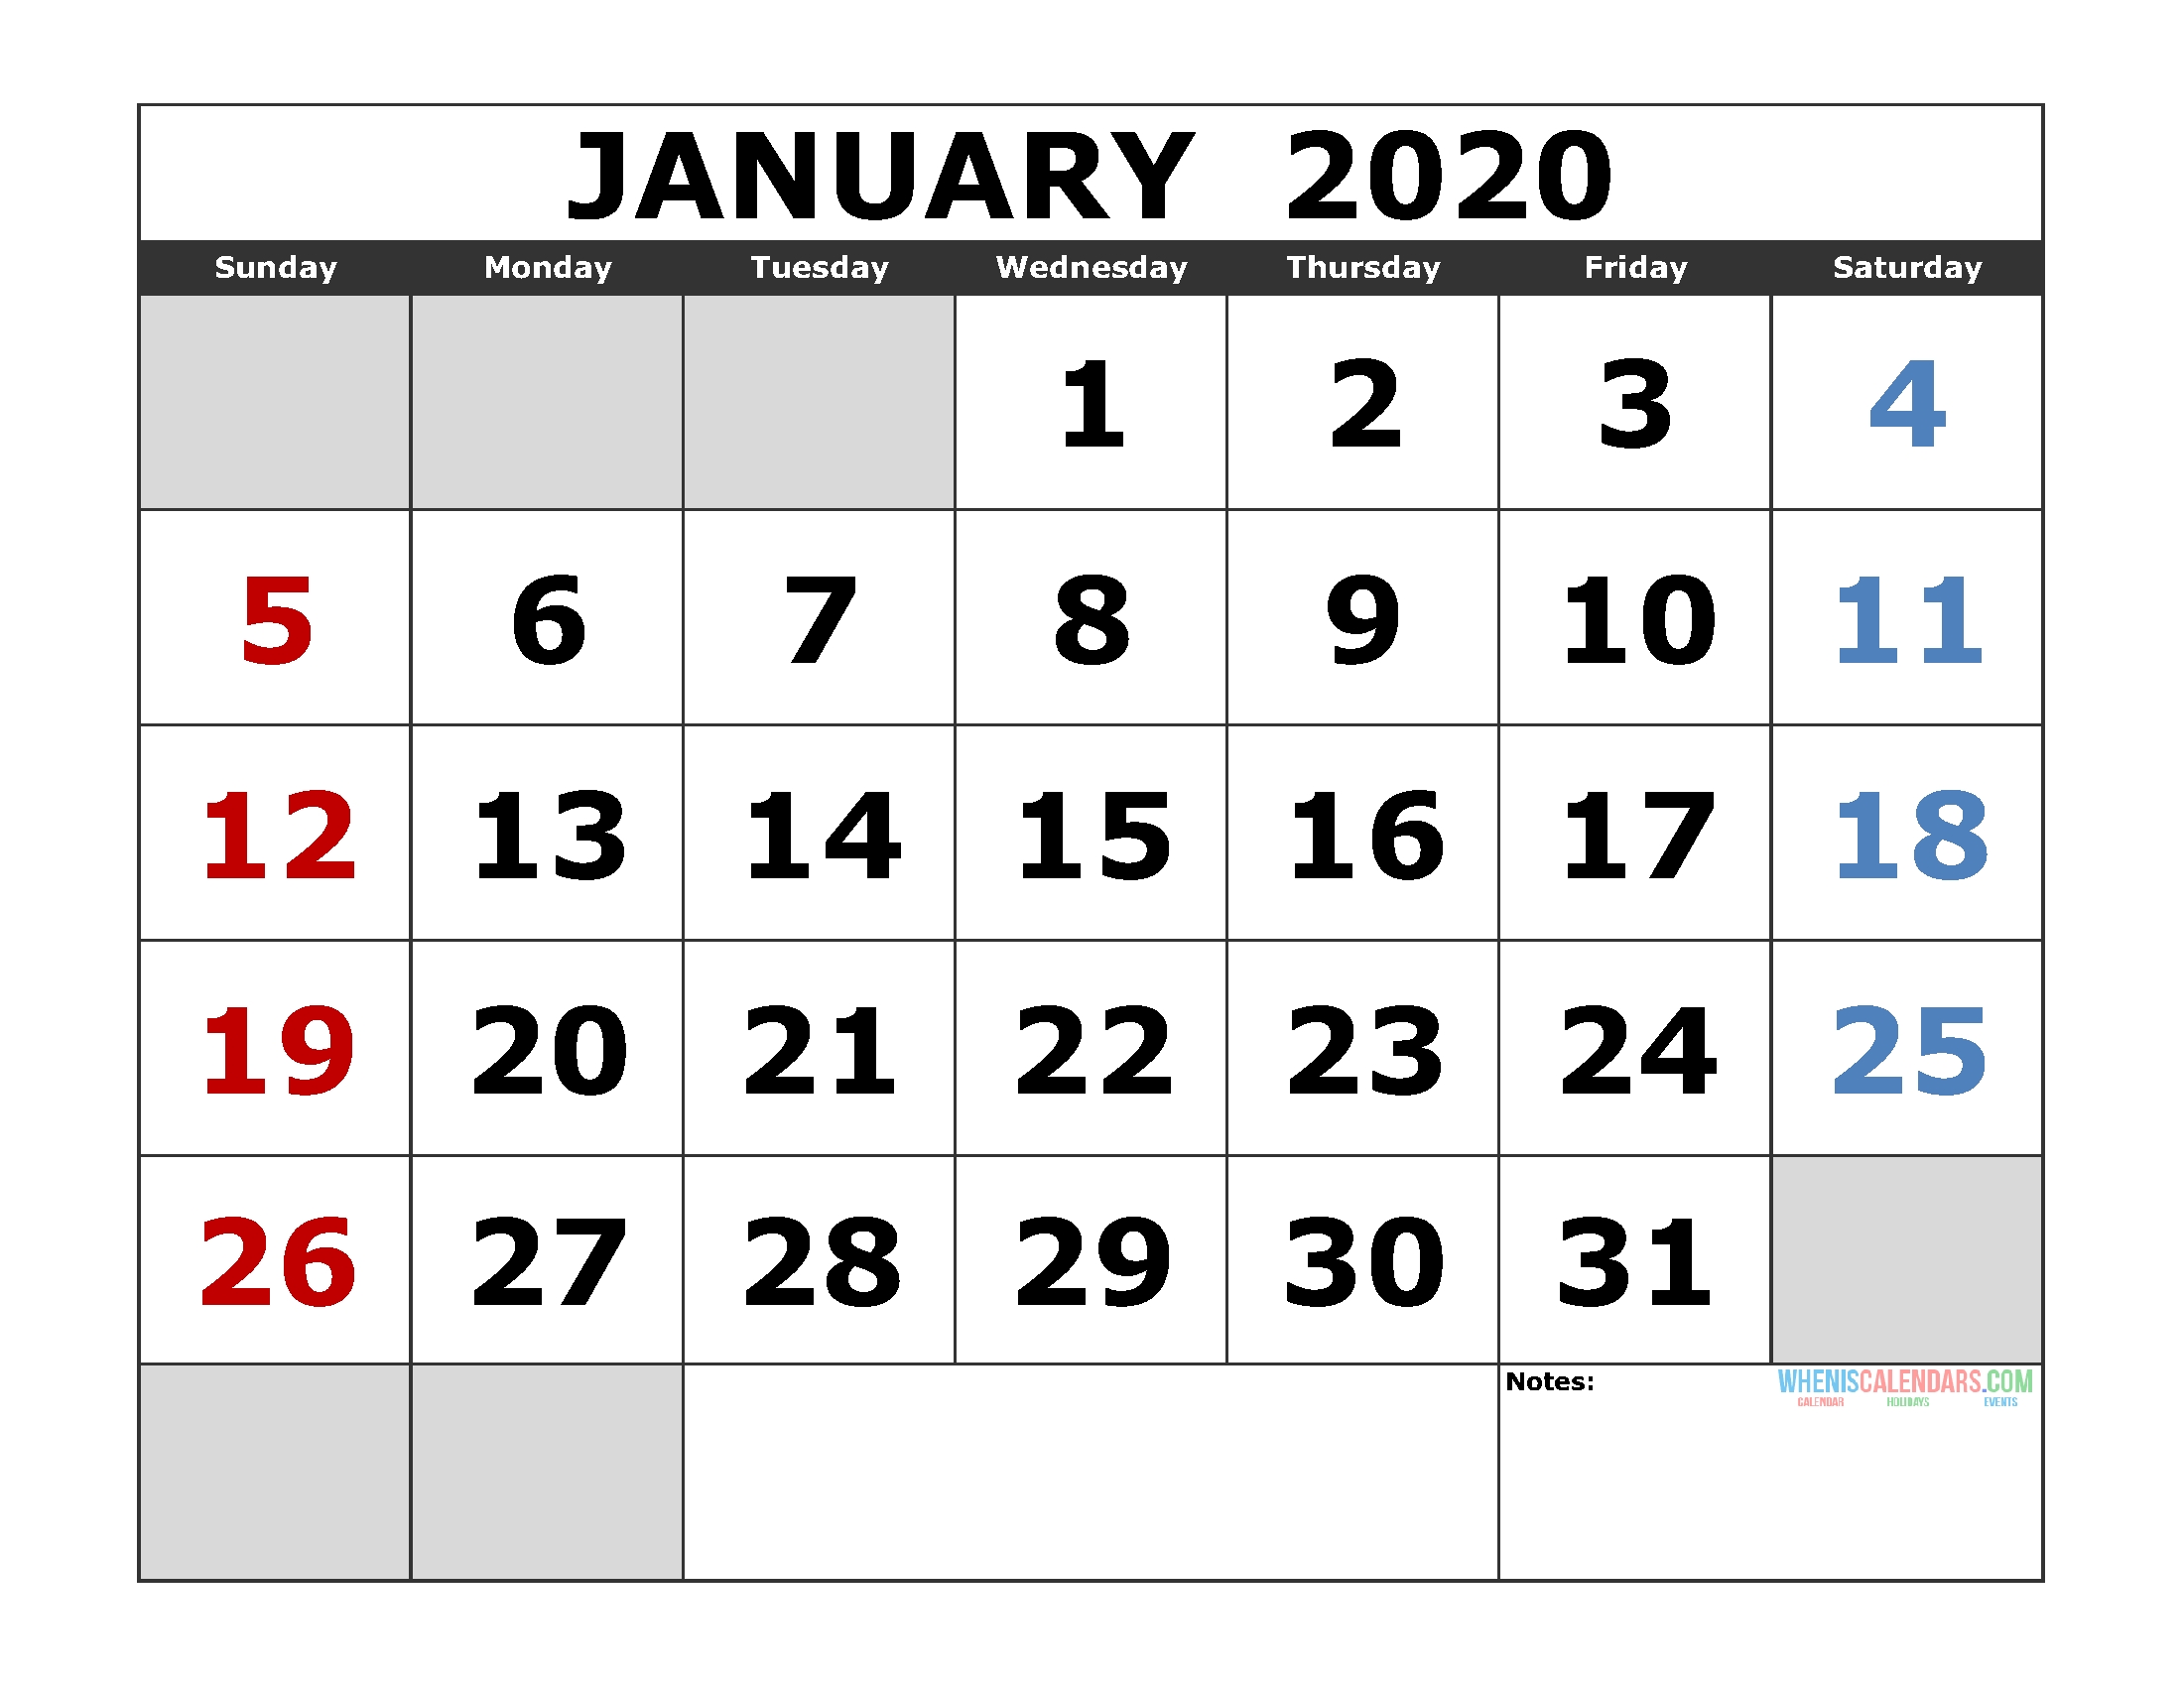 January 2020 Printable Calendar Template Excel, Pdf, Image-January 2020 Calendar Png